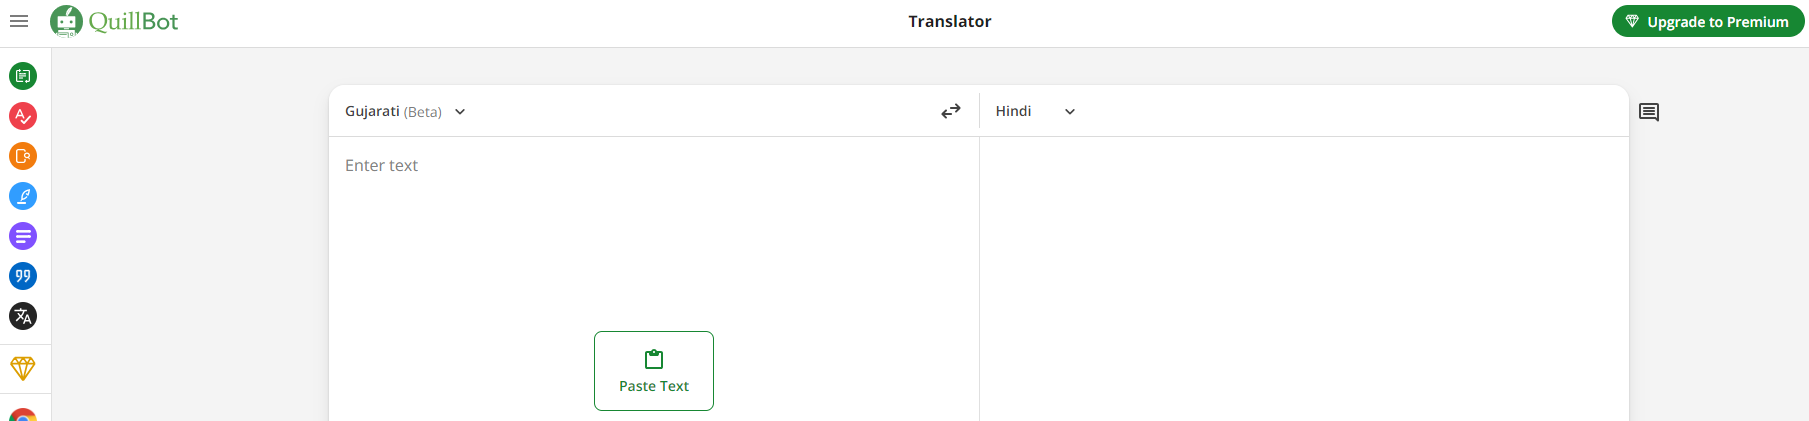 Gujarati to Hindi translation PDF with QuillBot AI